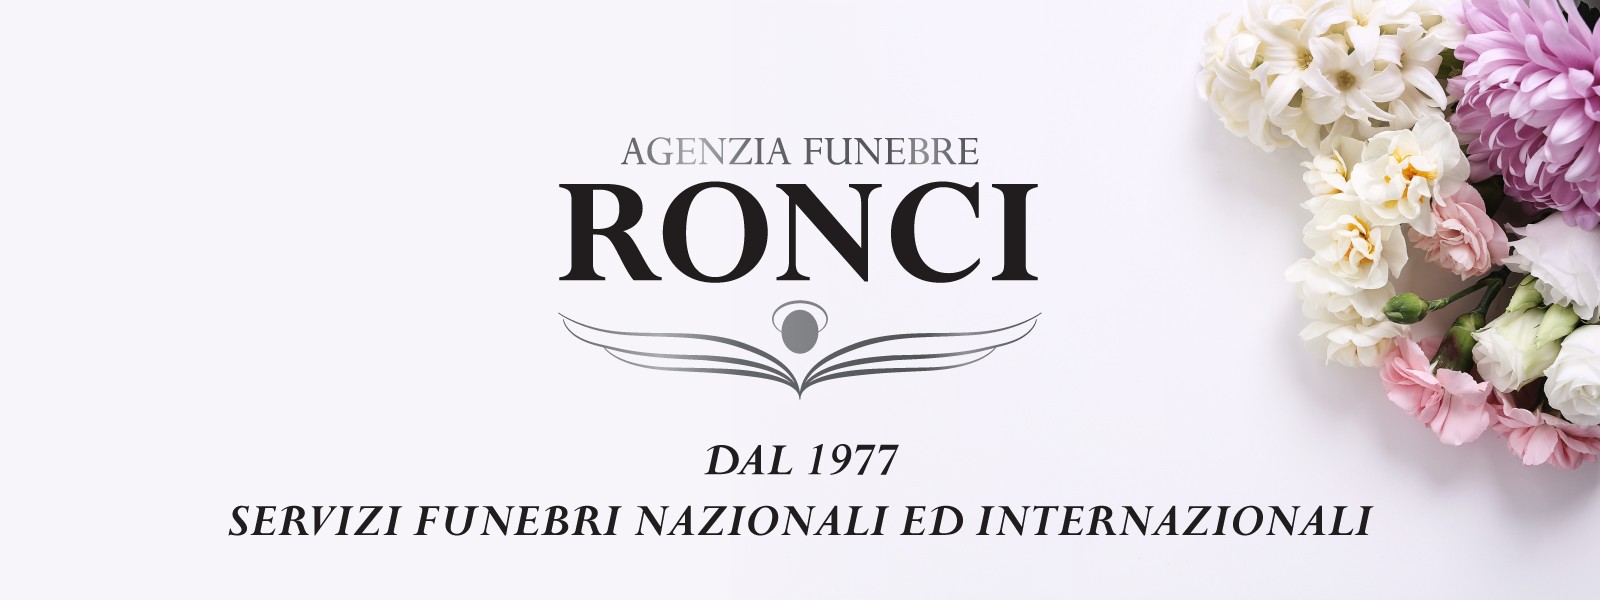 https://www.agenziafunebreronci.it/immagini_pagine/253/agenzia-funebre-ronci-253-600.jpg